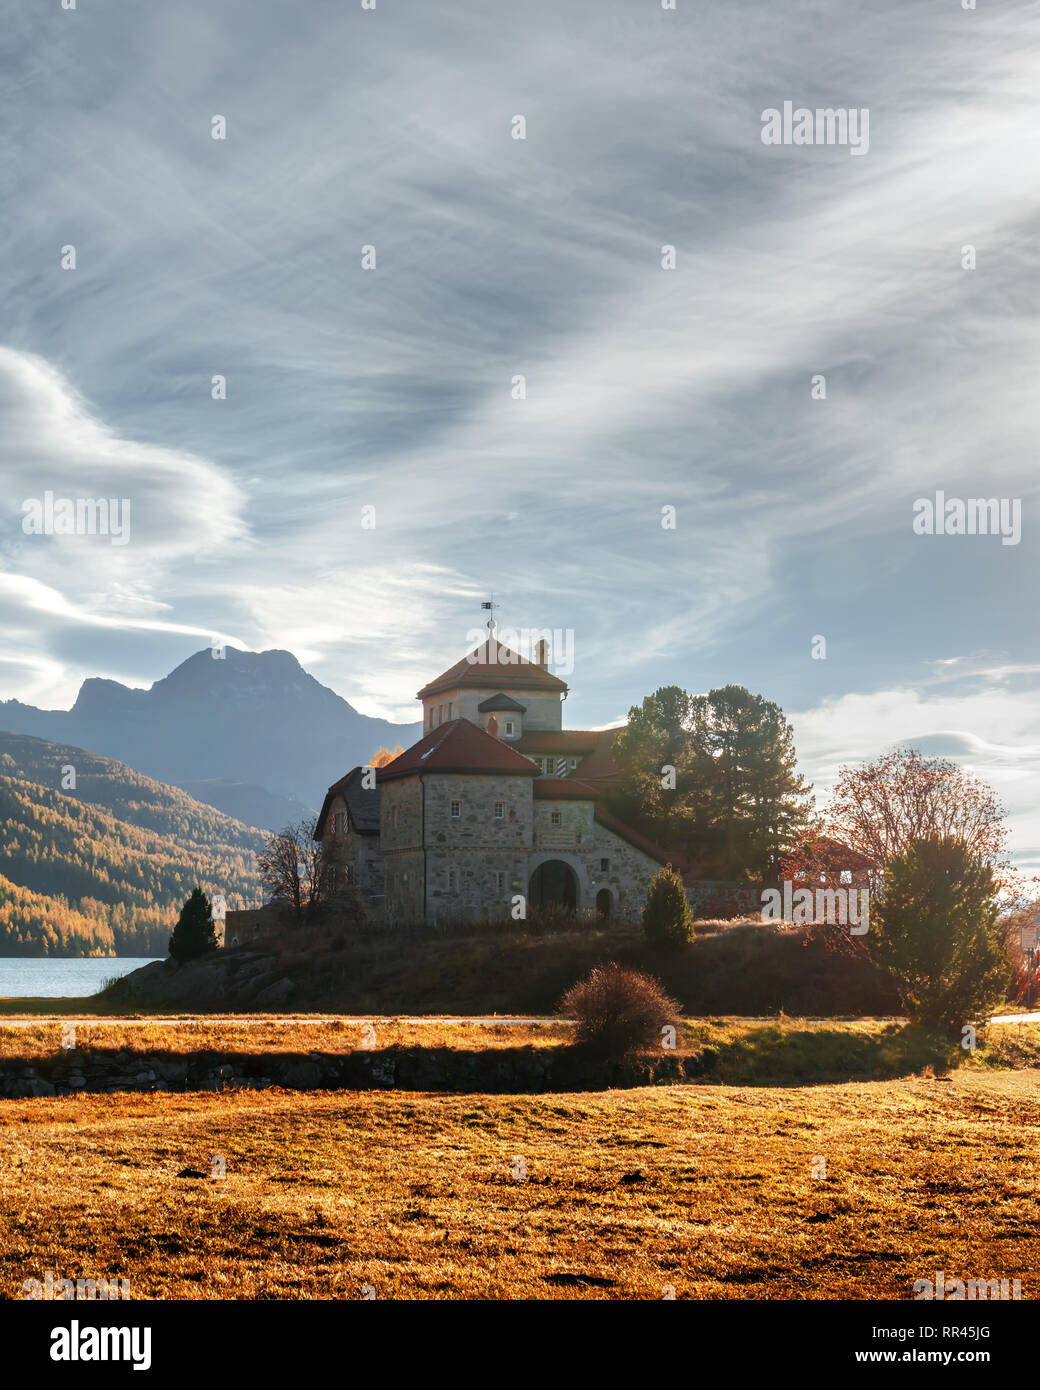 Amazing autumn sunny day at Champferersee lake in the Swiss Alps. Castle of Crap da Sass, Silvaplana village, Switzerland, Europe Stock Photo